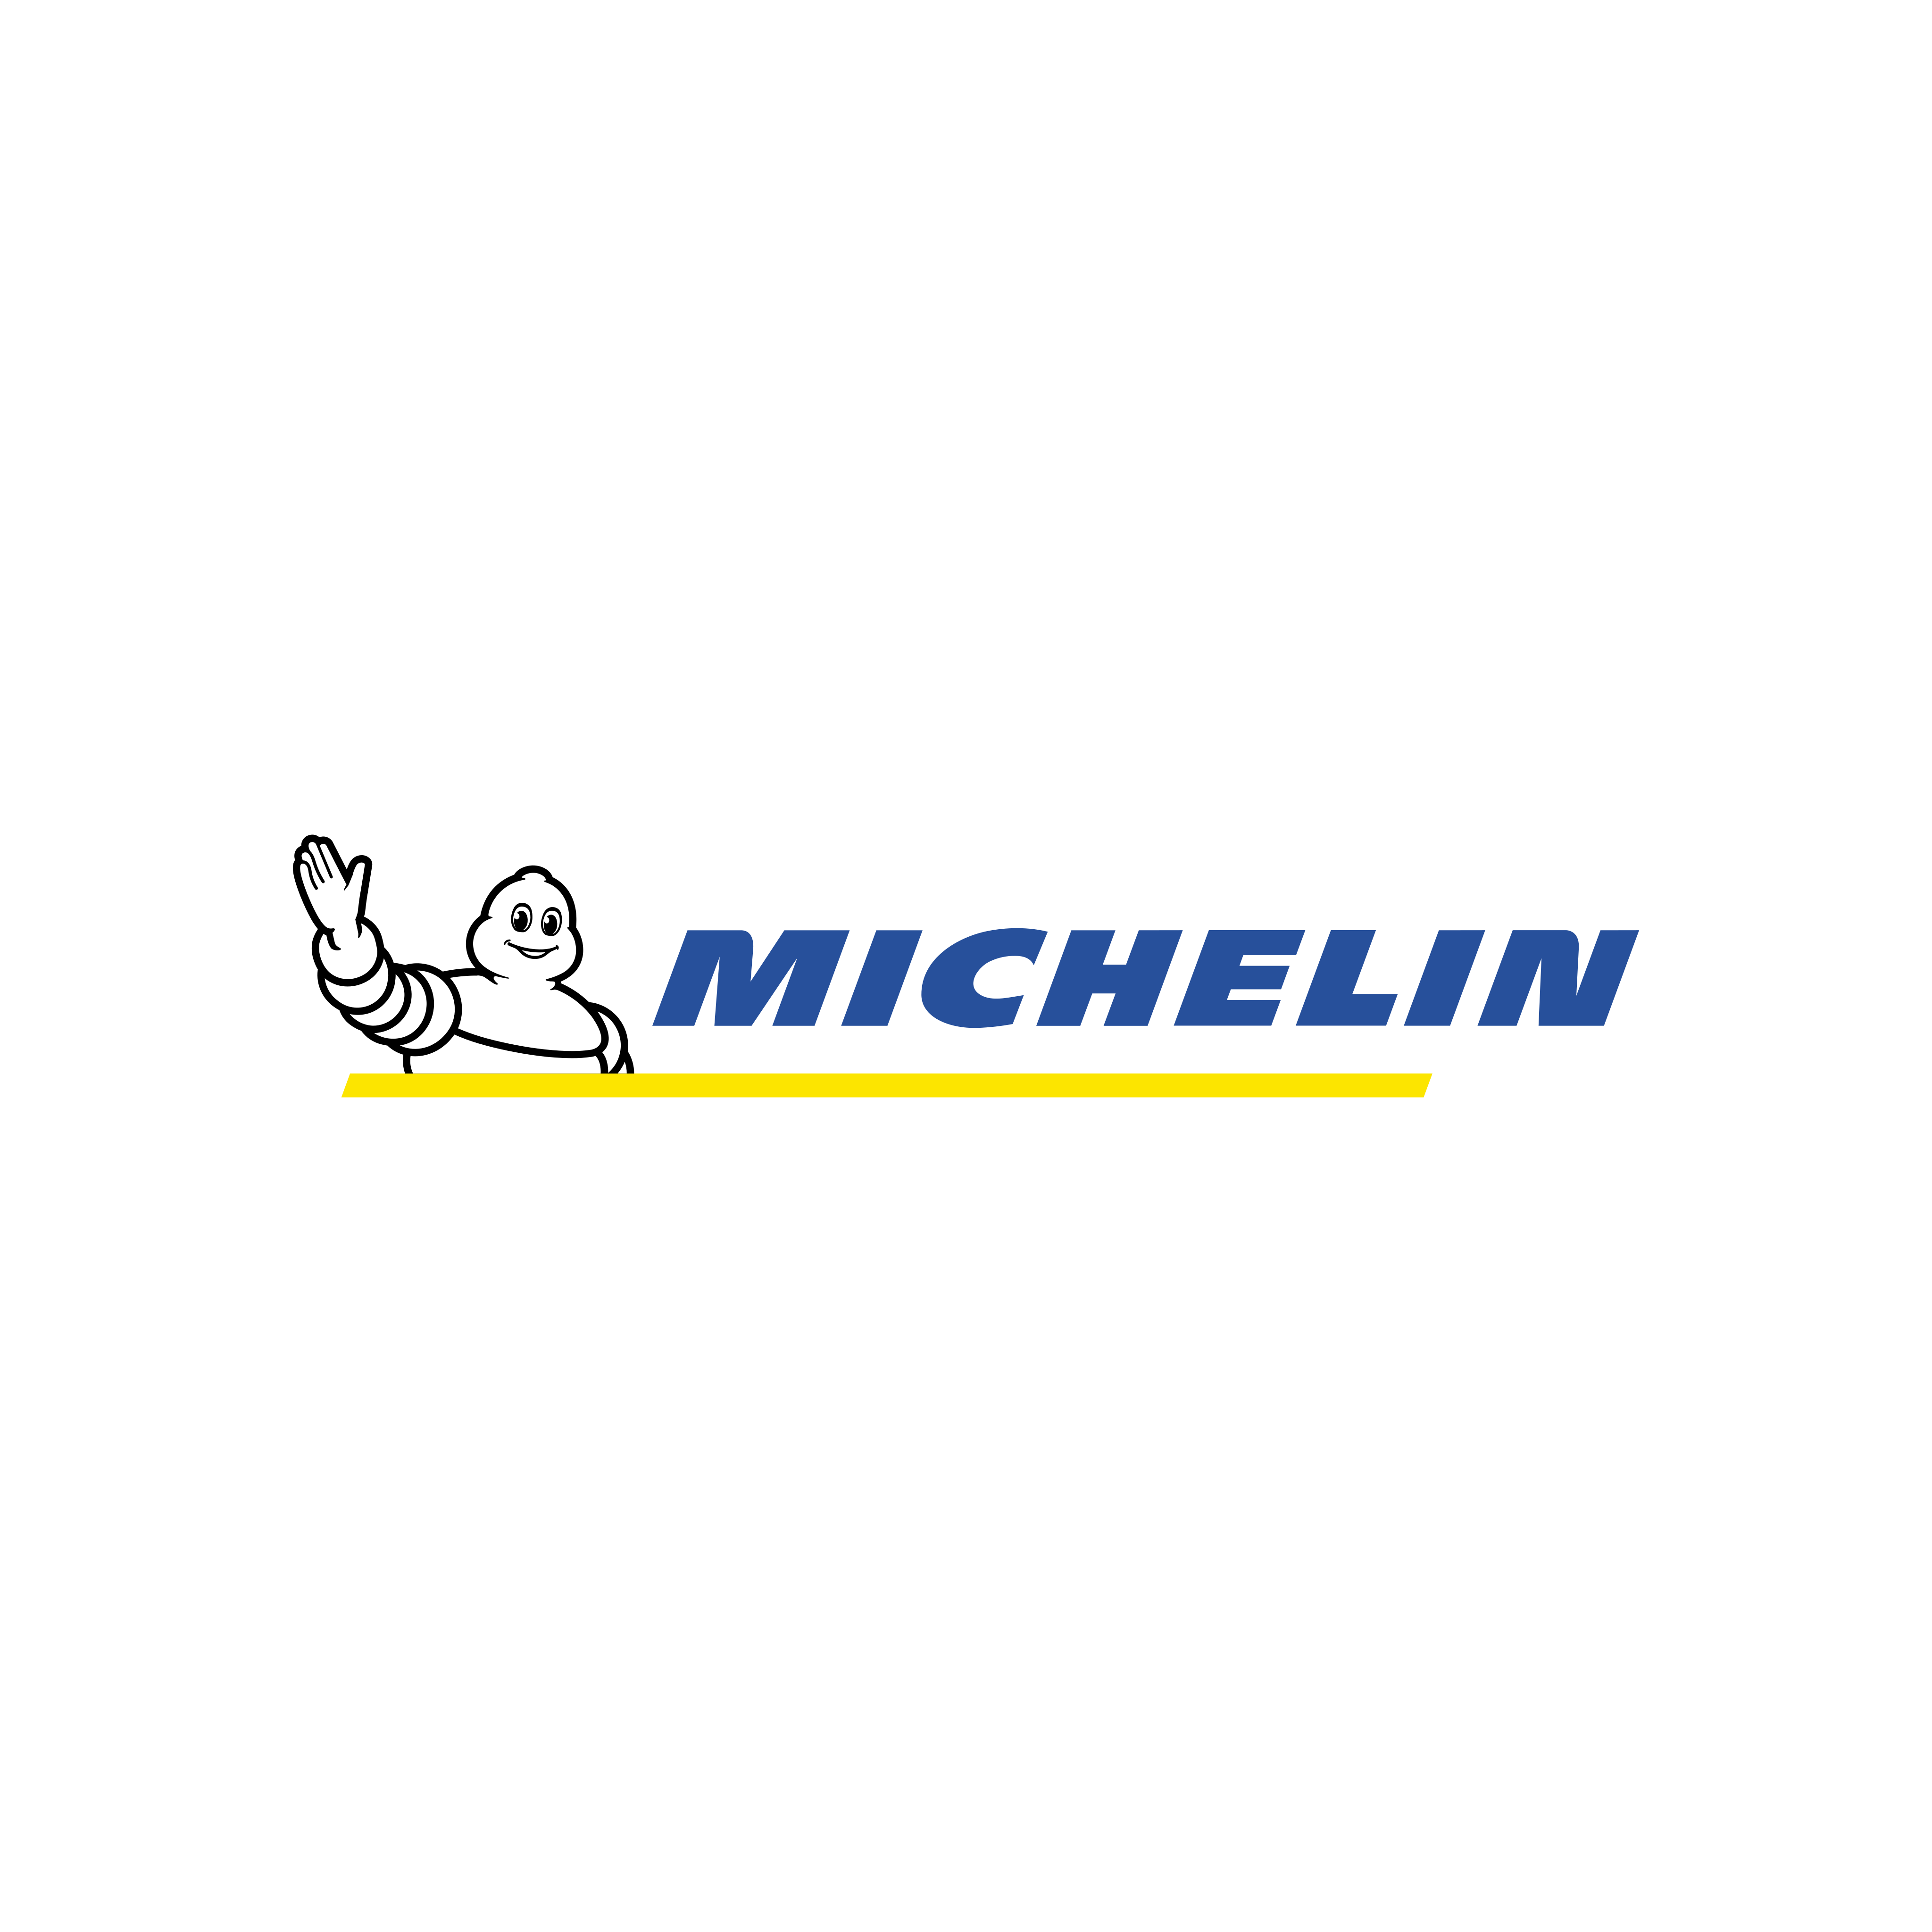 michelin logo 0 - Michelin Logo